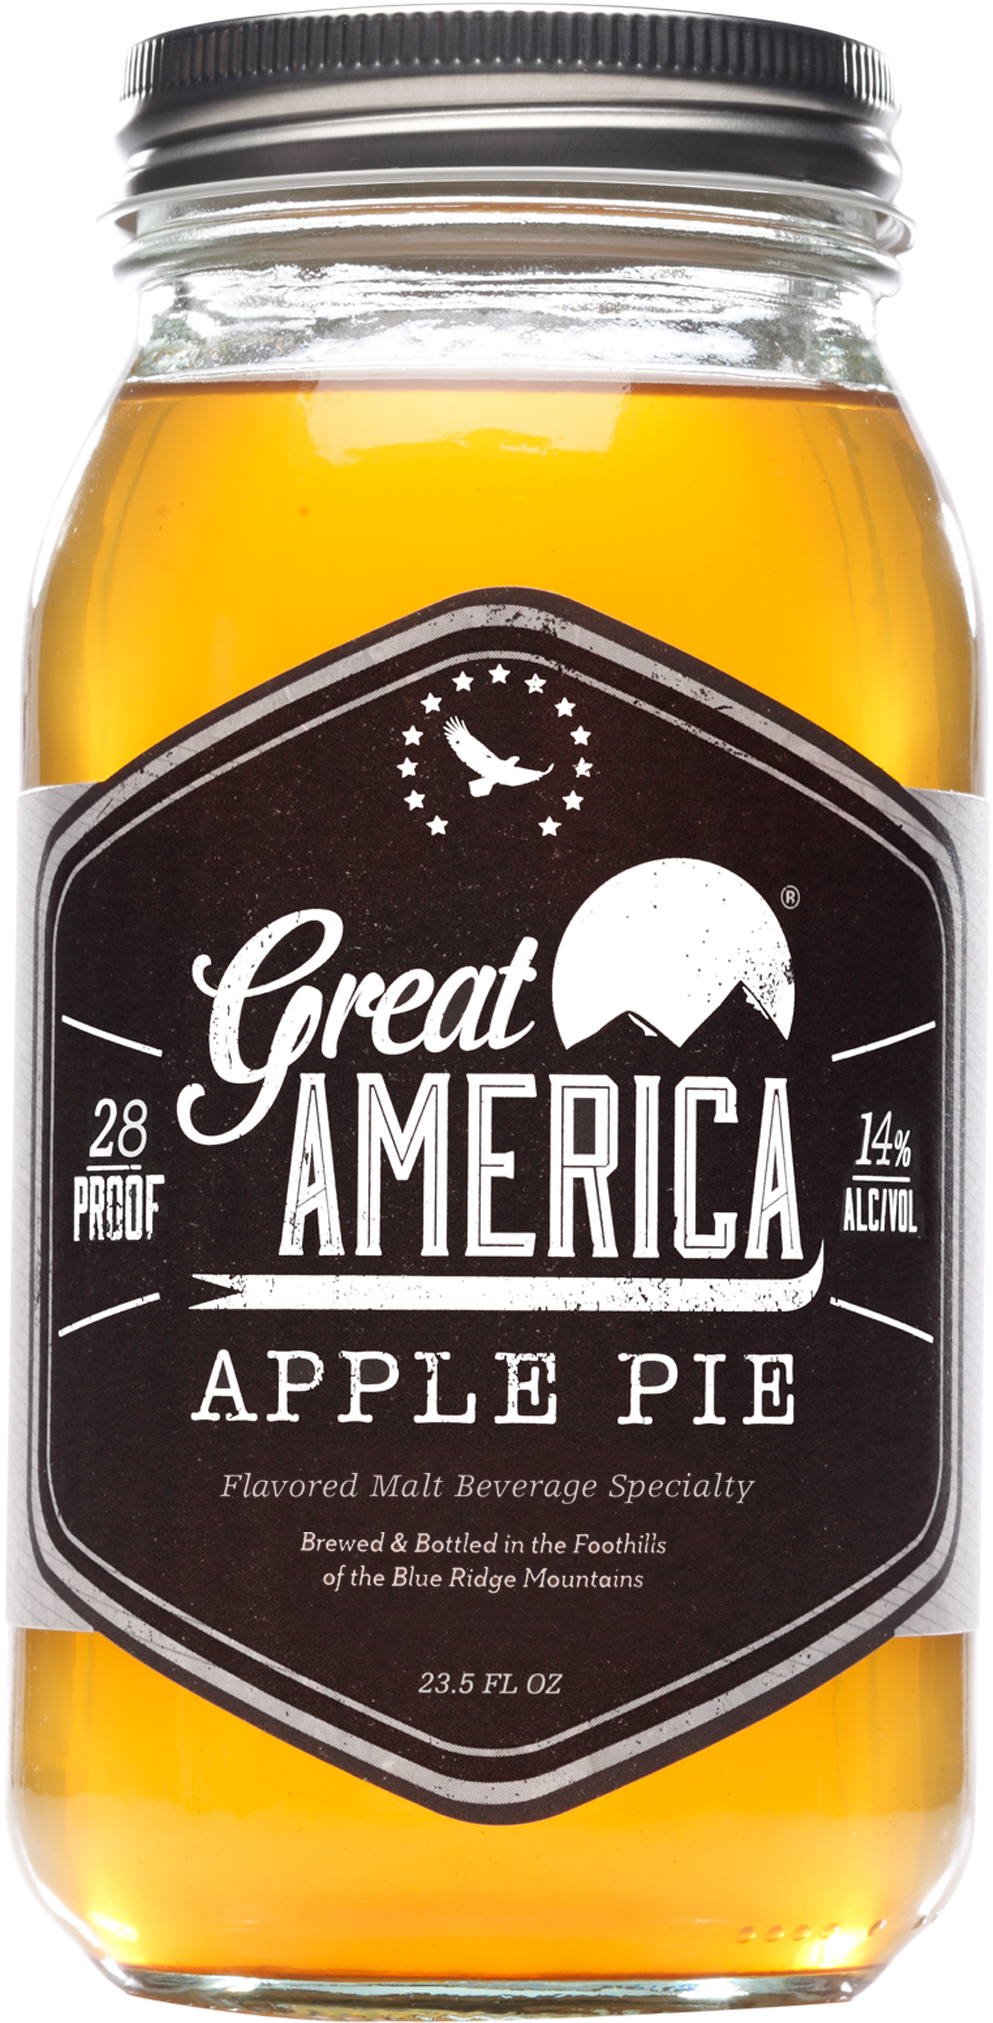 Mountain Dew Clipart American - Great America Malt Specialty, Apple Pie - 23.5 Fl Oz (1088x2100)